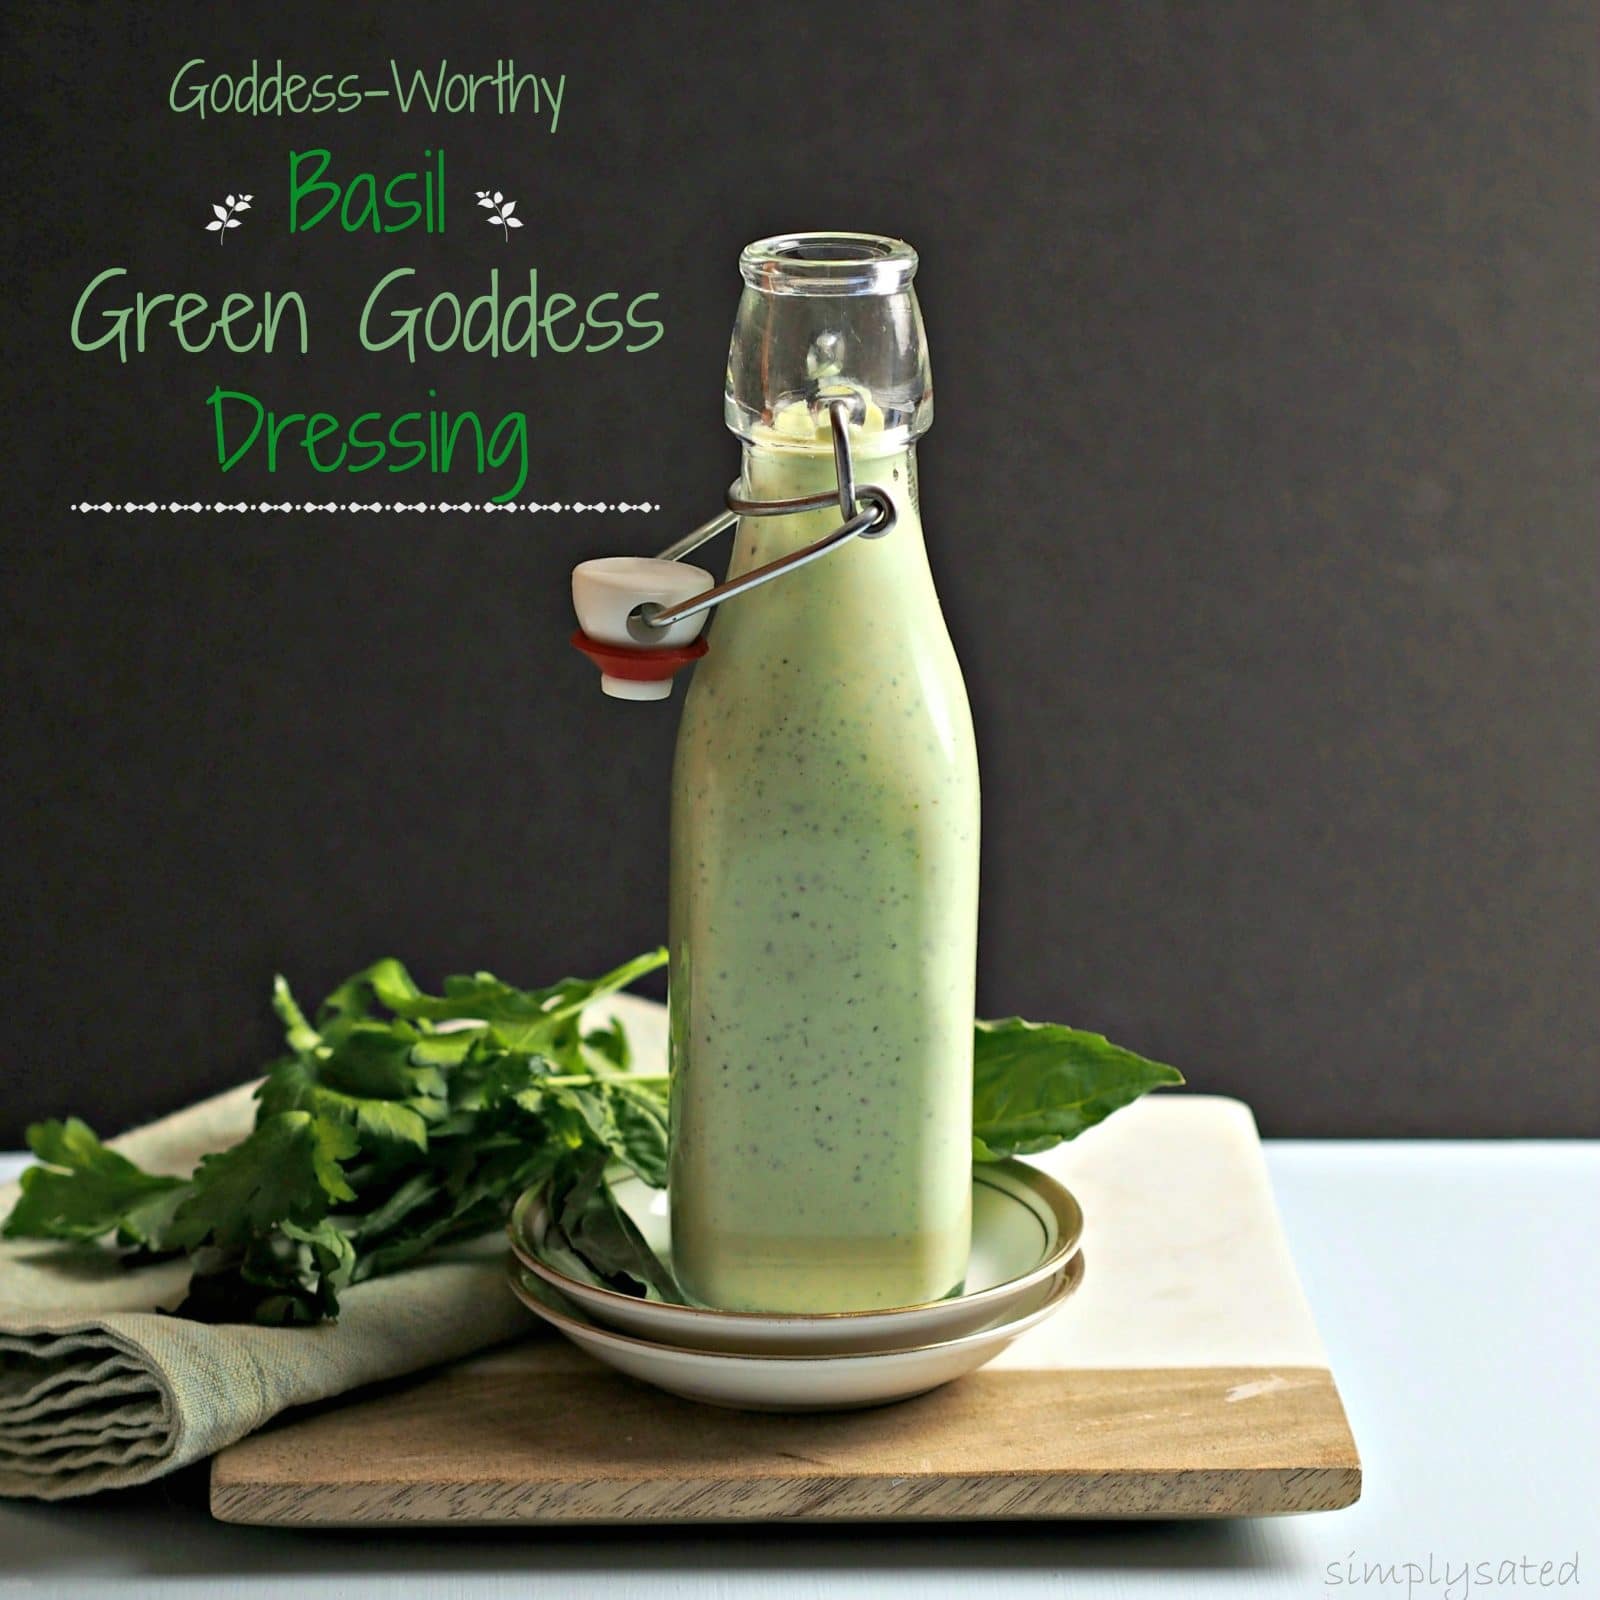 Basil Green Goddess Dressing - a dressing fit for Gods & Goddesses. Basil, parsley & yogurt all "dressed" up with lemon, cloves, green onion & seasonings. simply sated